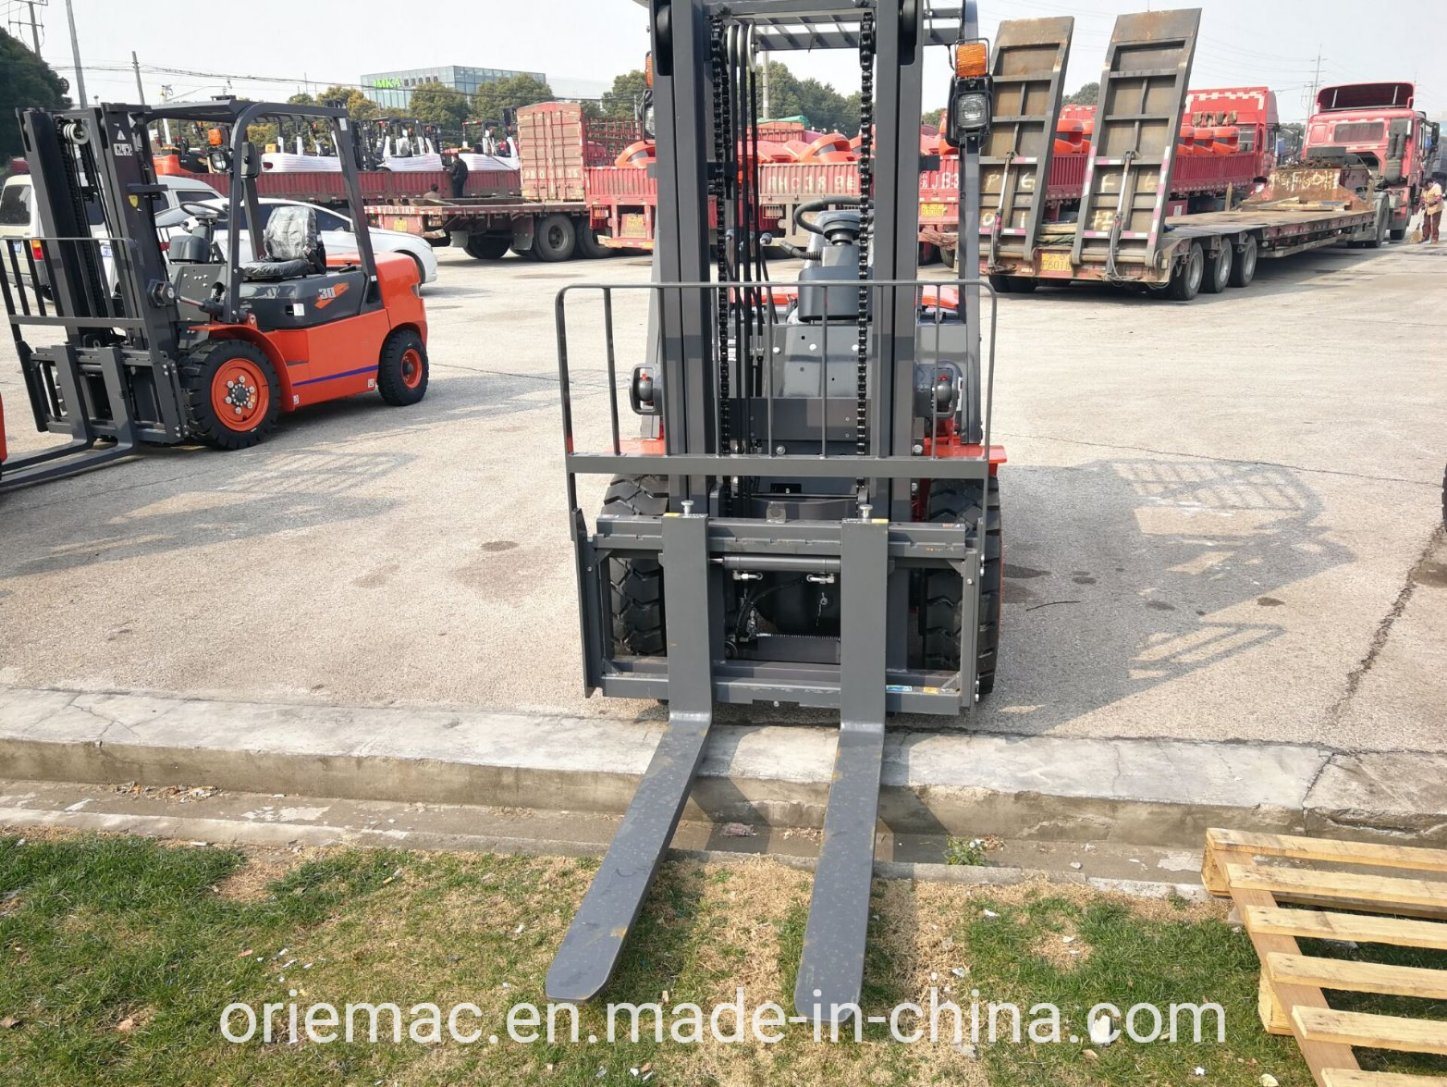 Lonking 2.5 Ton Mini Forklift LG25dt in Argentina